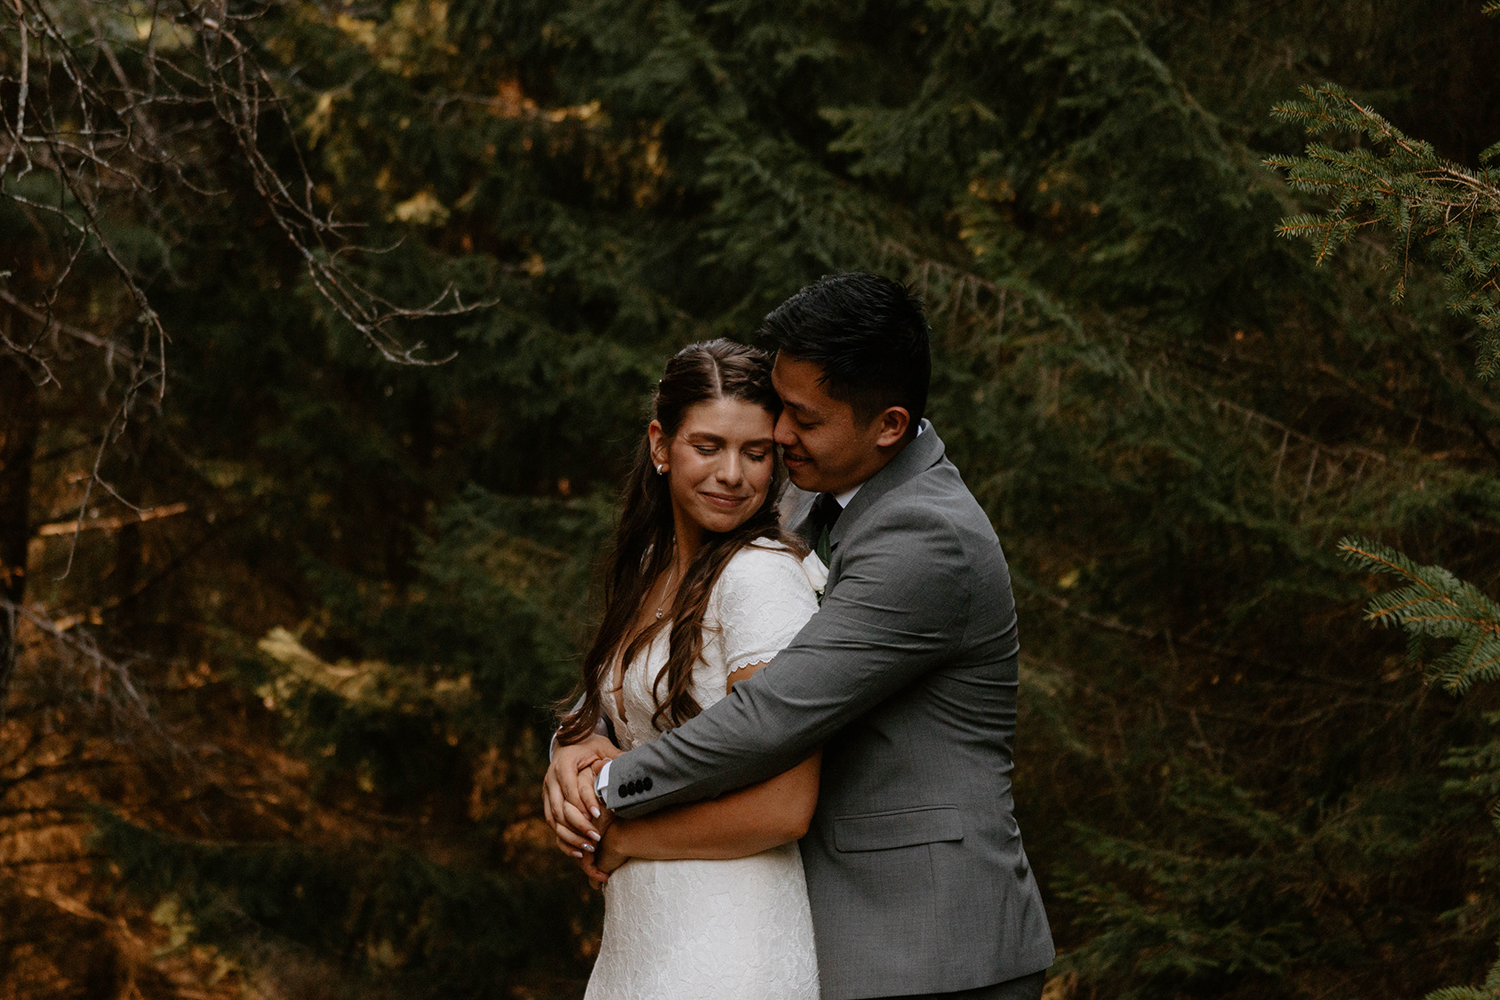 Couple celebrates wedding in northern michigan forest during backyard wedding.